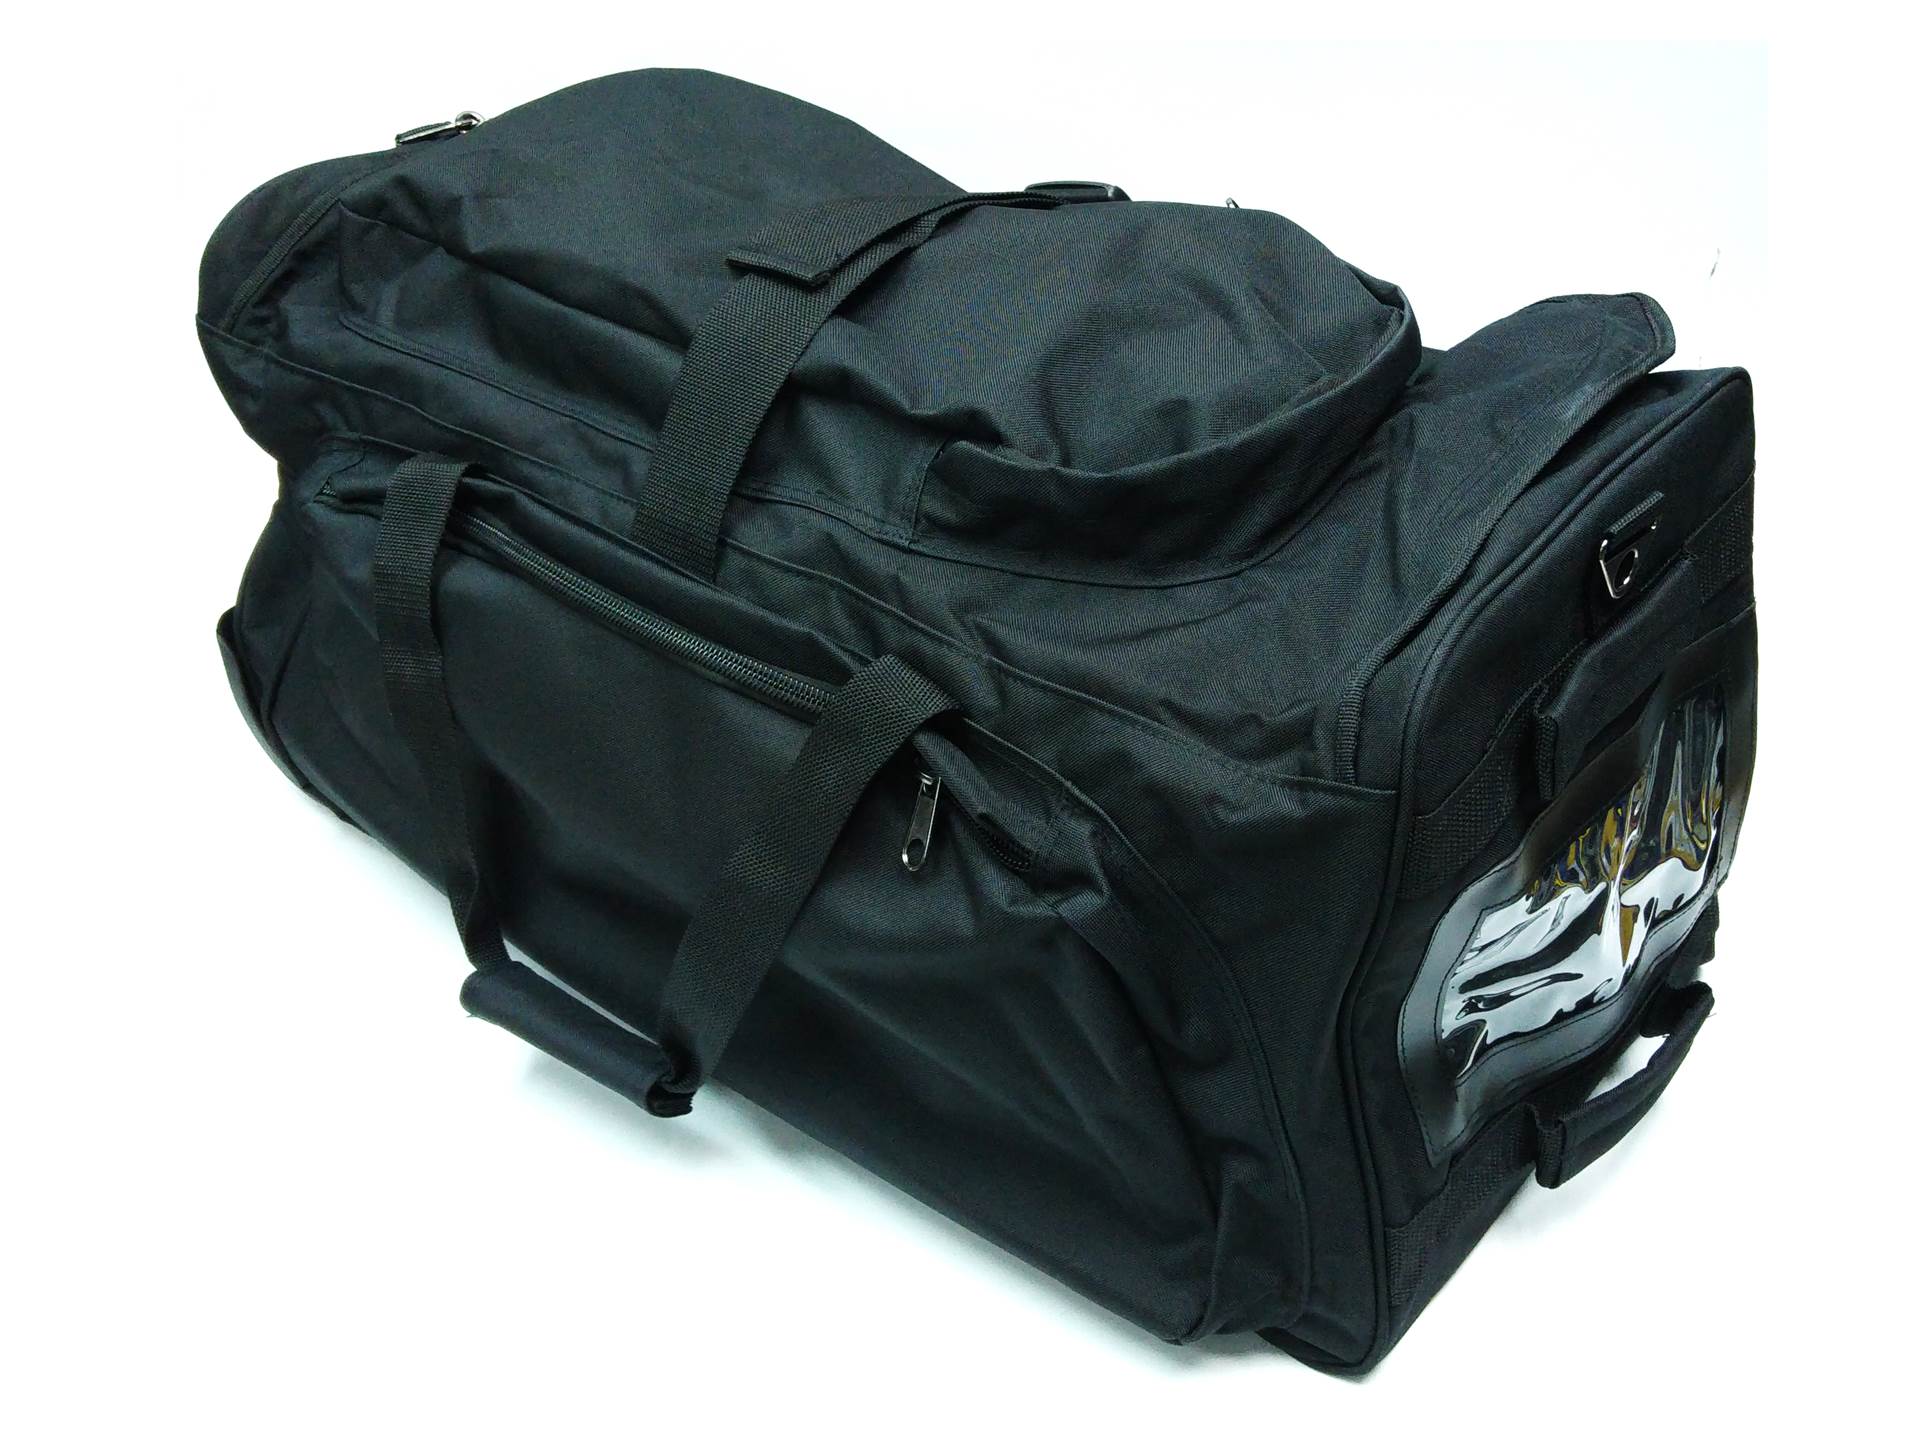 Nylon Duffel Bag with Wheels #3168/3688